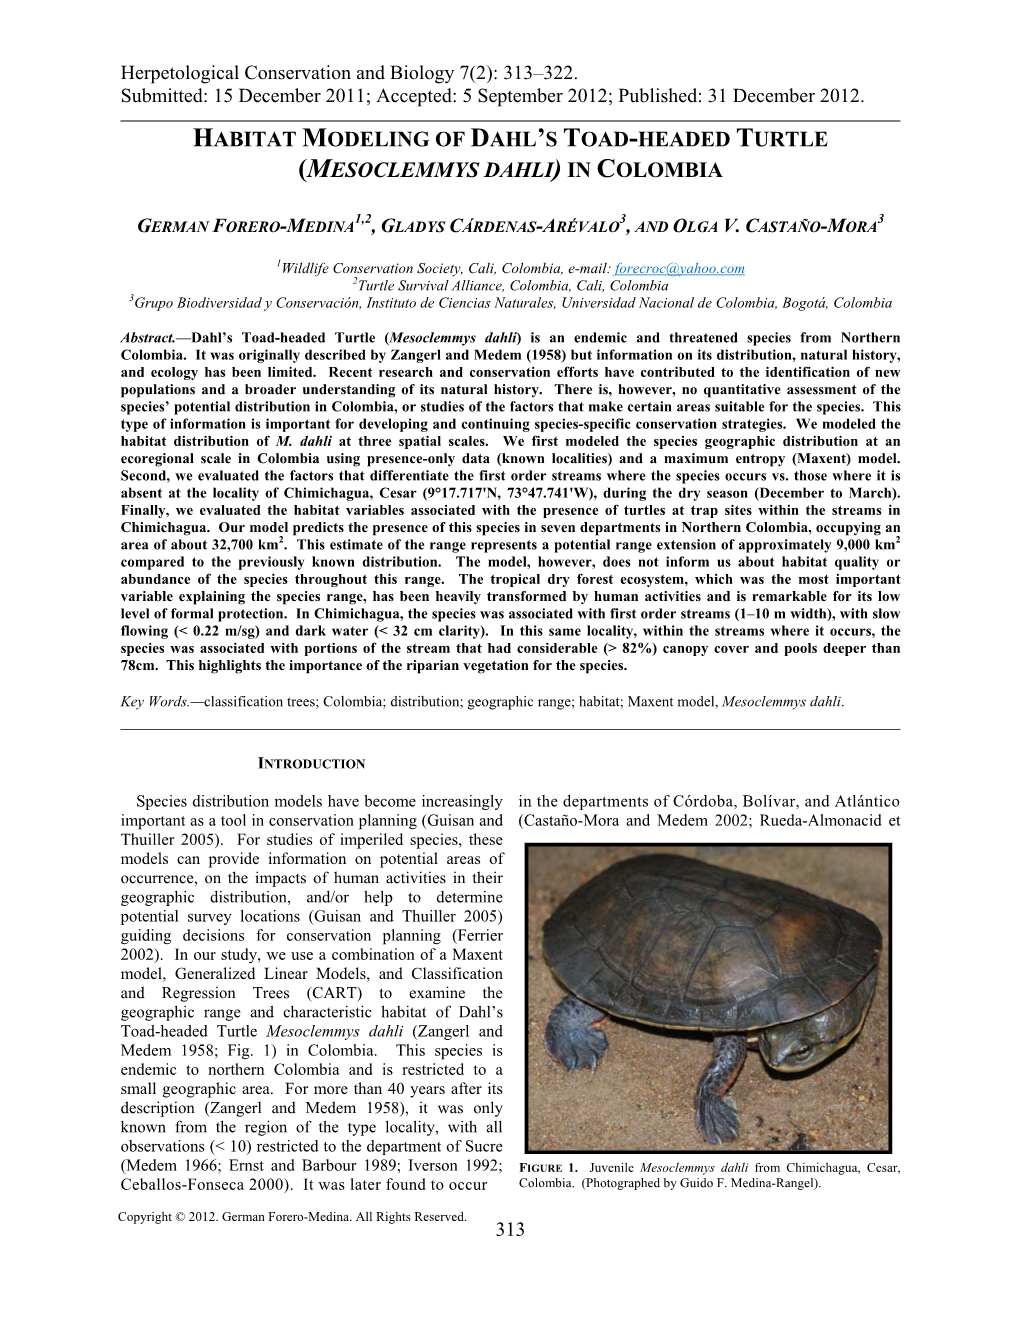 Habitat Modeling of Dahl's Toad-Headed Turtle